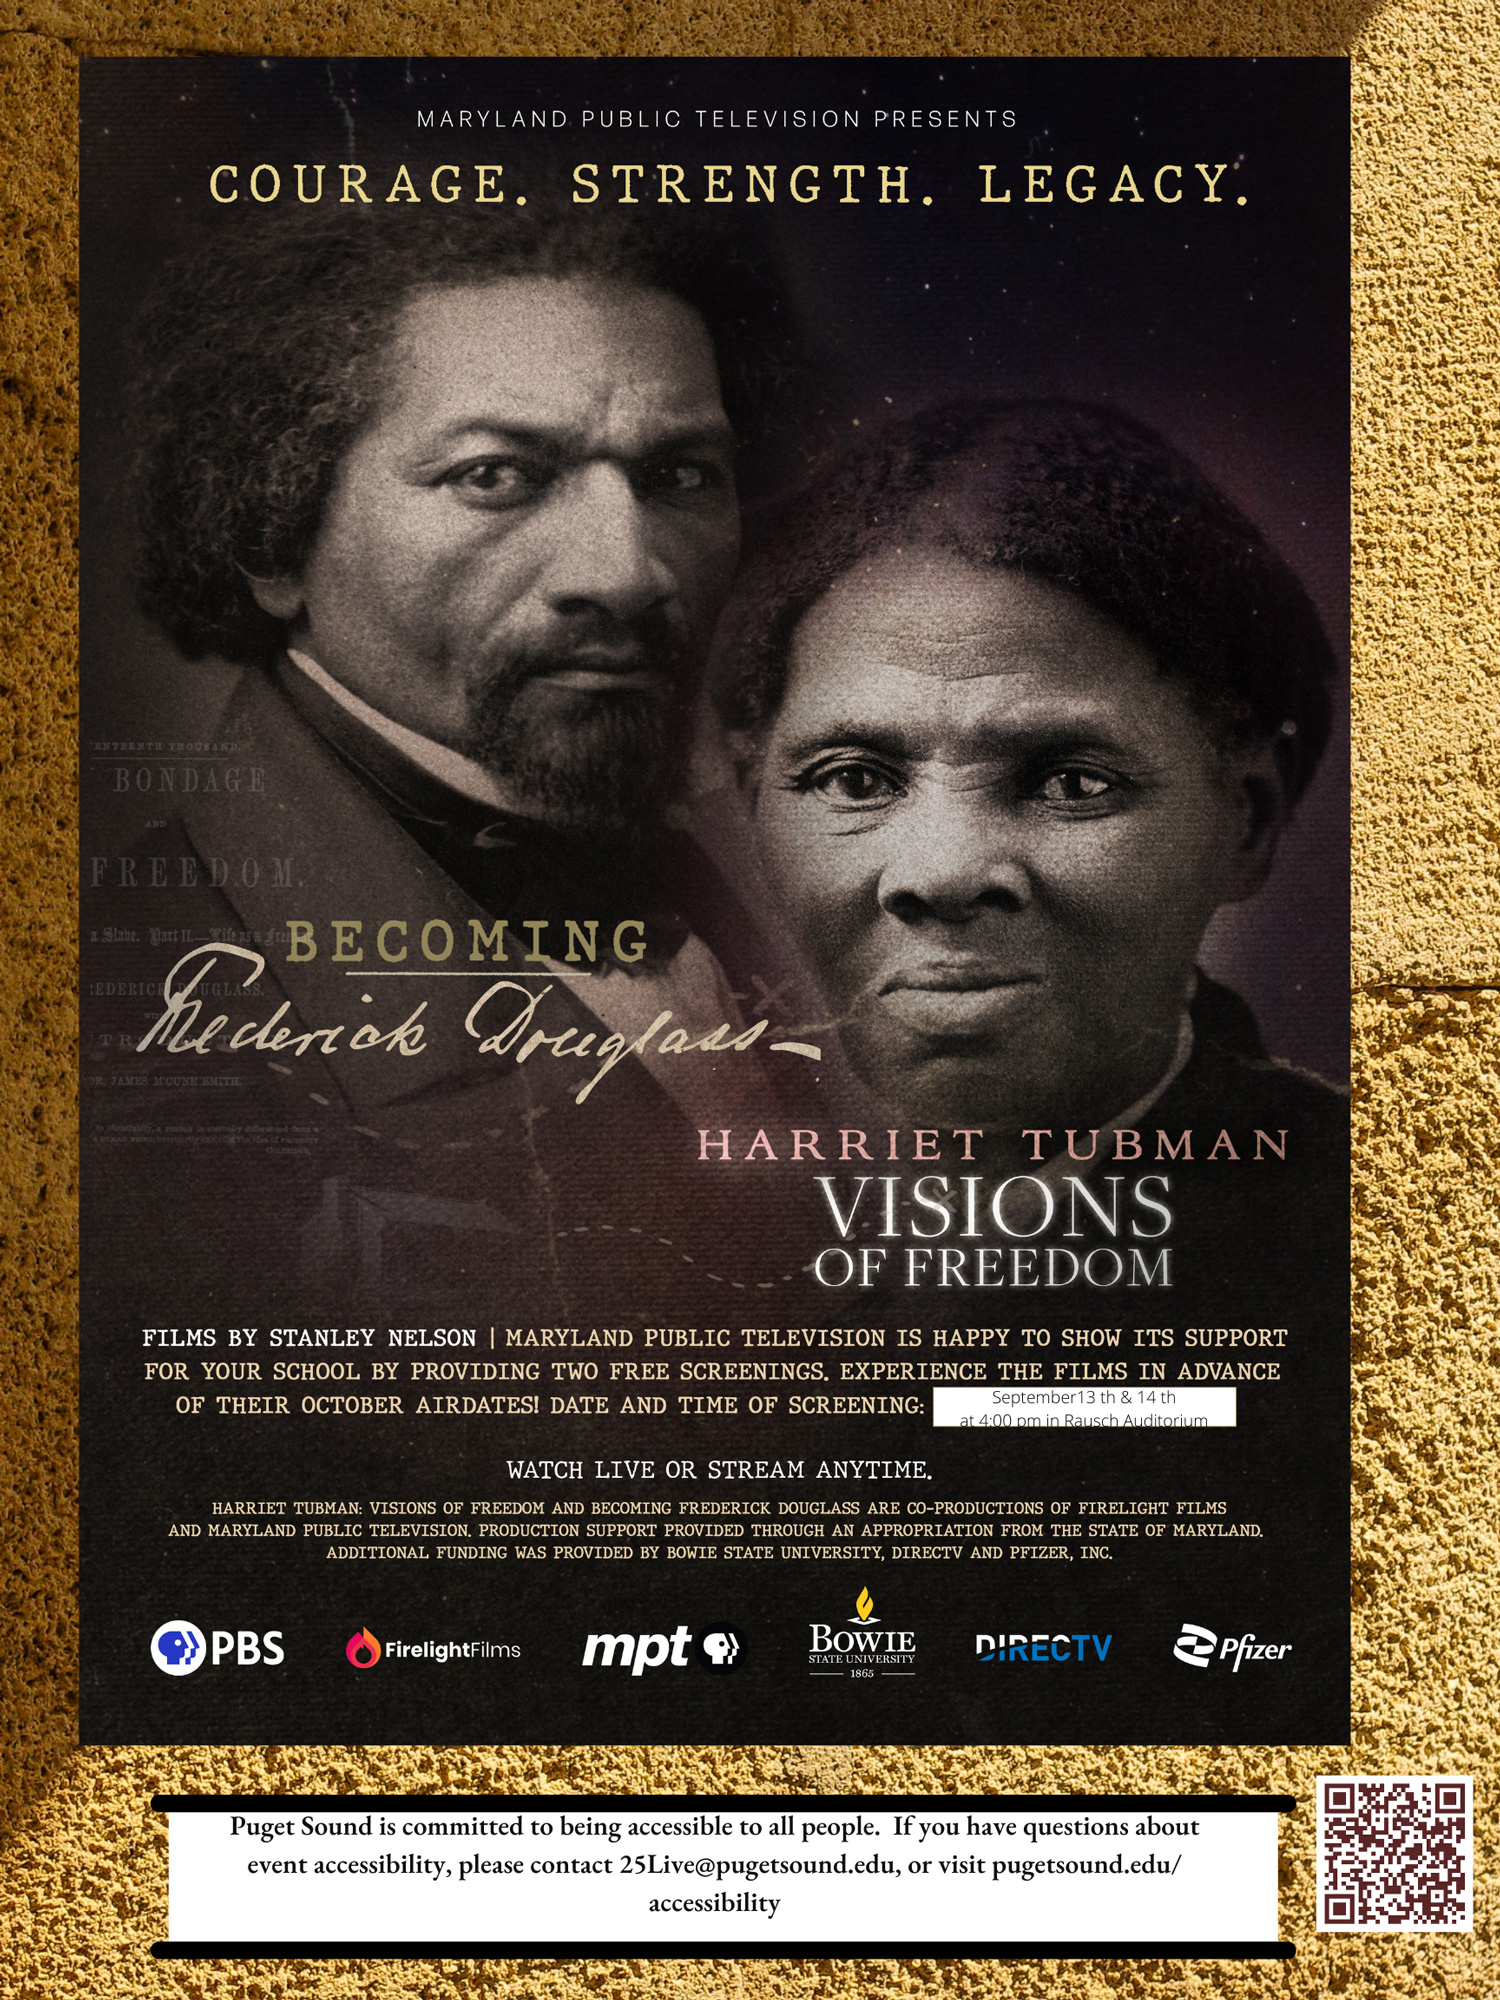 Harriet Tubman - Visions of Freedom Documentary Screening